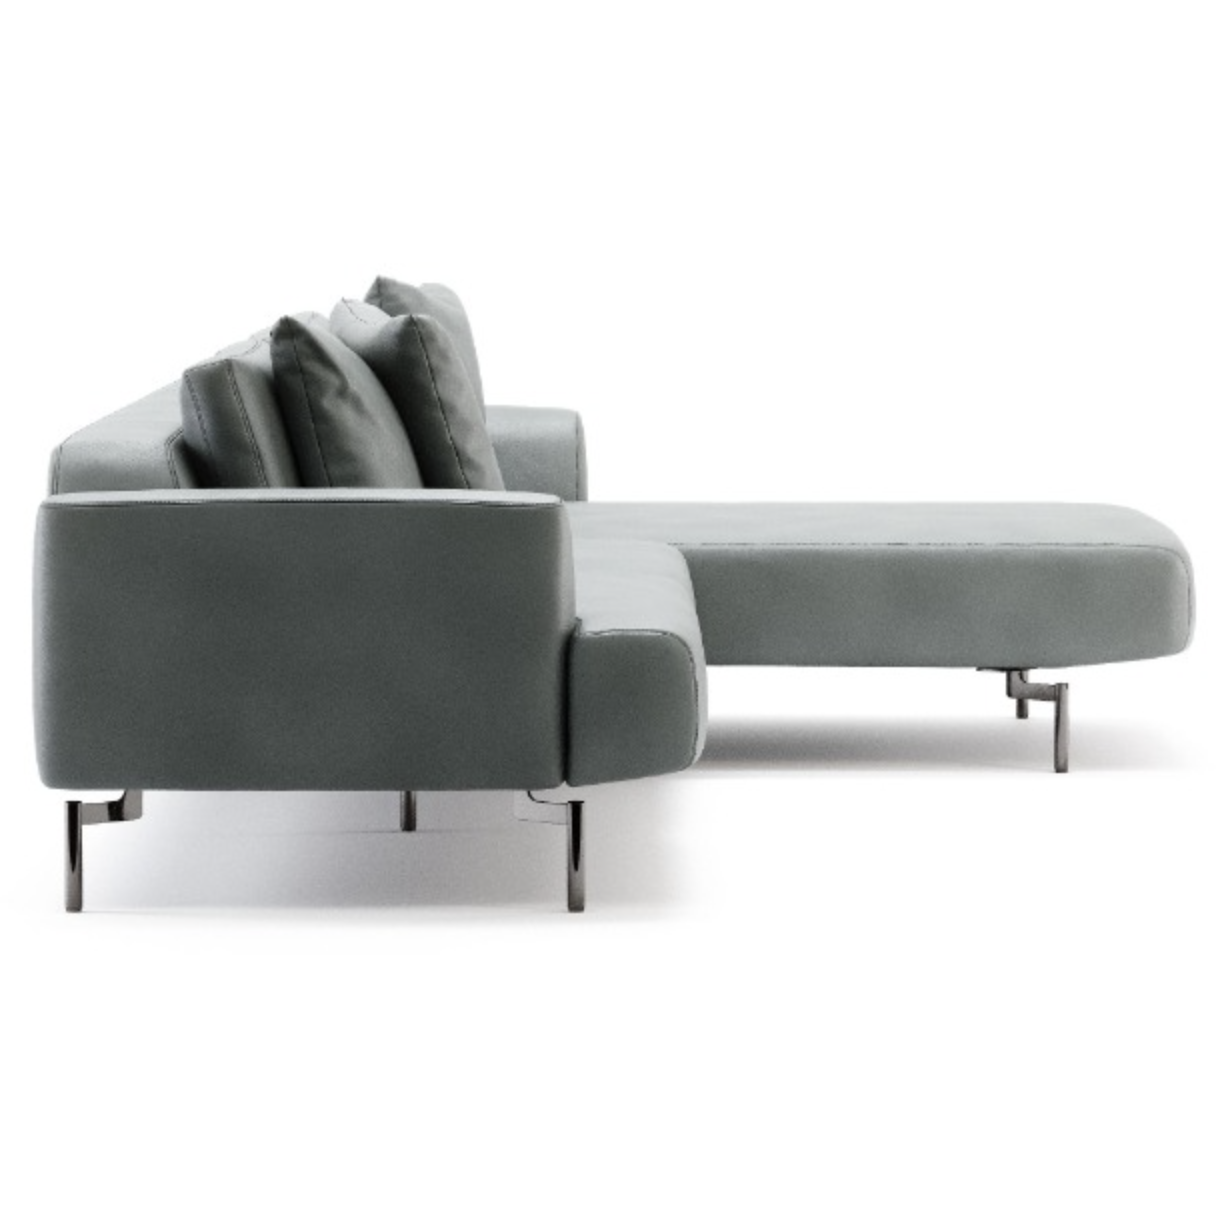 Domkapa Taís Chaise Longue Sofa - Customisable | Modern Furniture + Decor